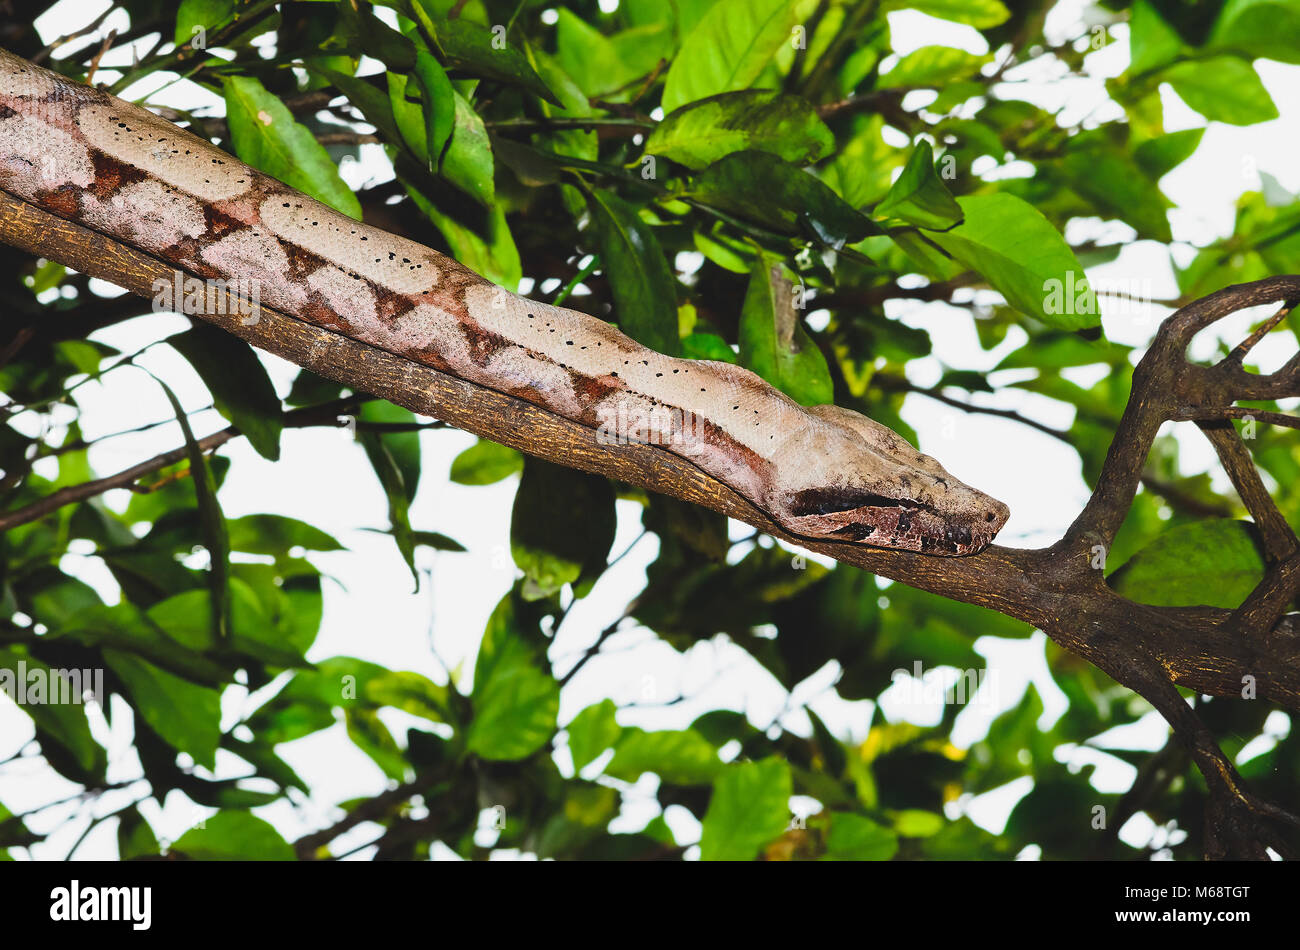 Wild Jararaca snake on a tree branch. Stock Photo